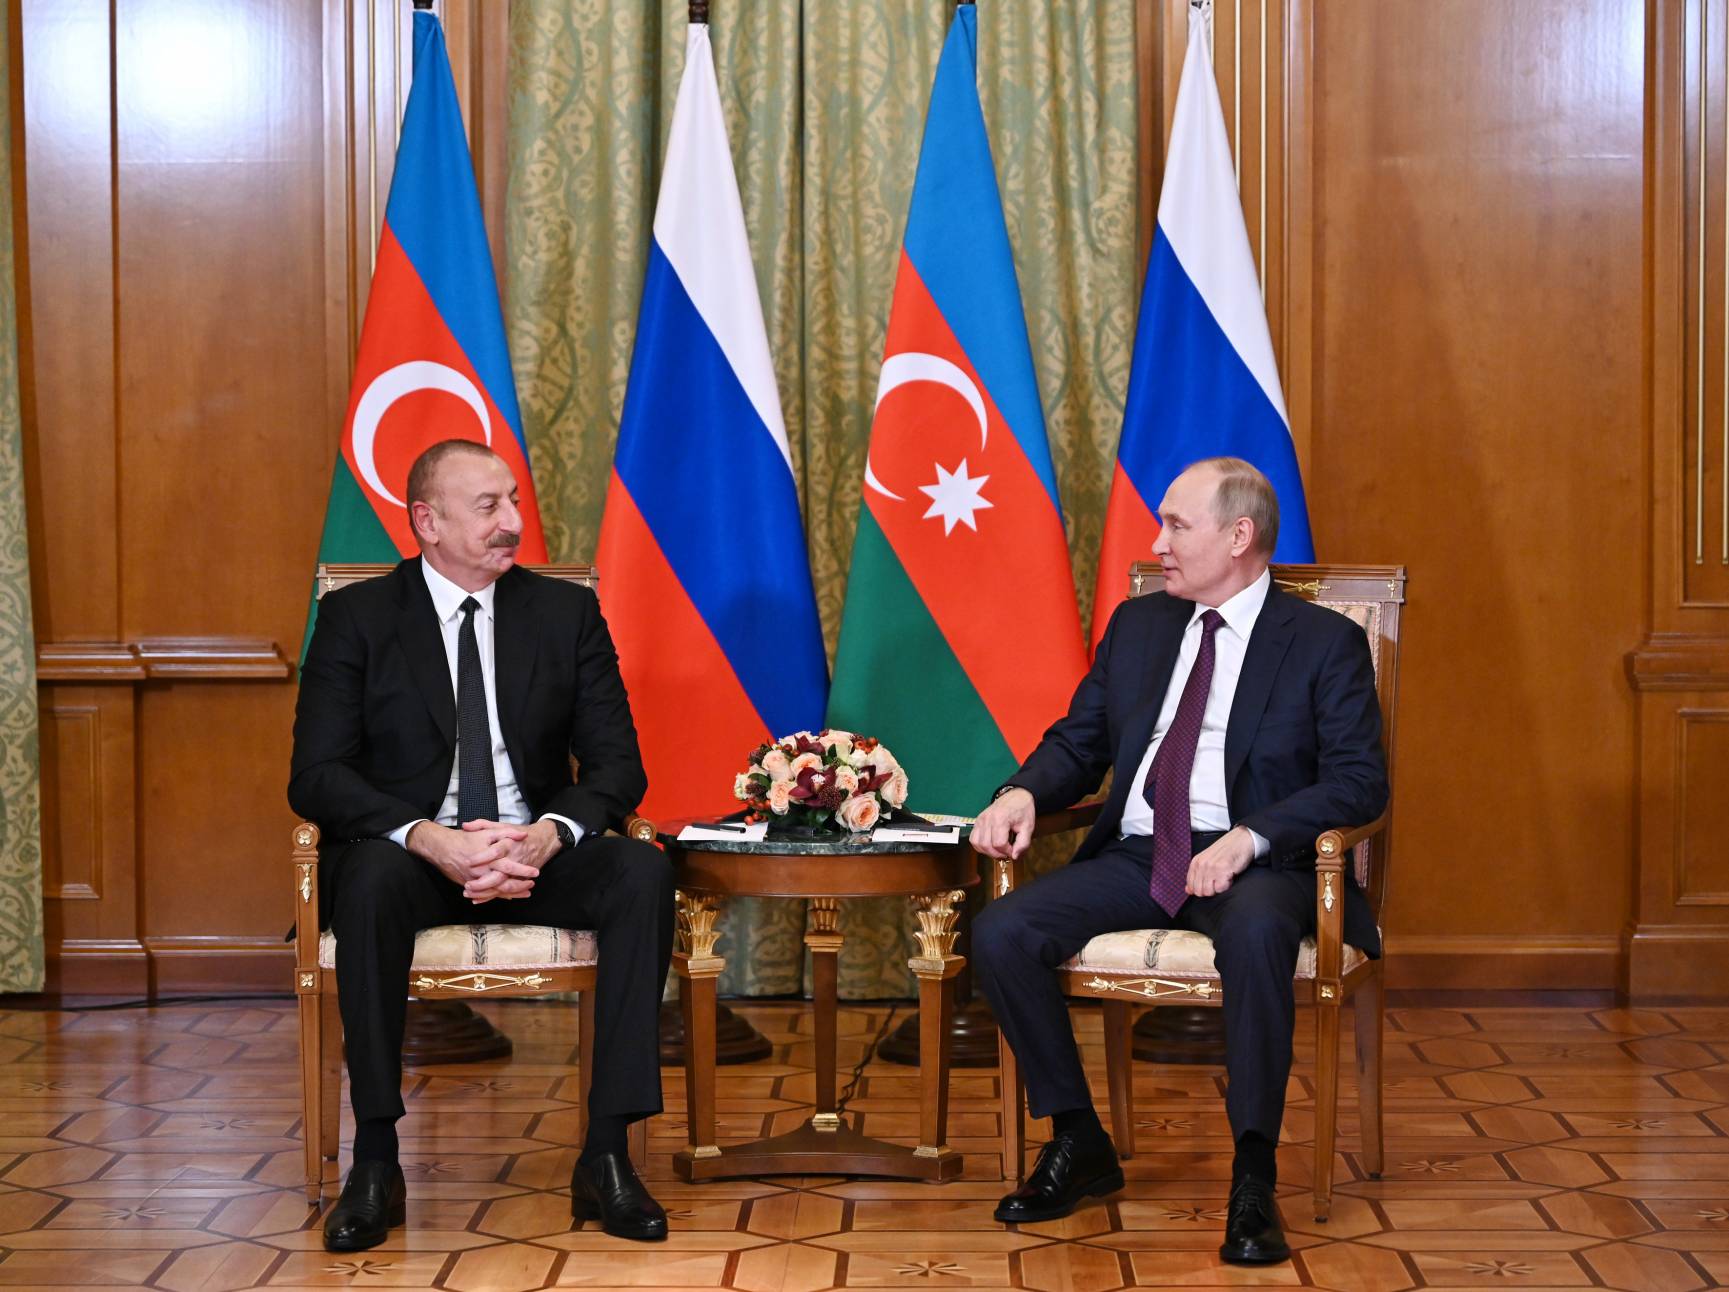 Bilateral_meeting_was_held_between_President_of_Azerbaijan_Ilham_Aliyev_and_President_of_Russia_Vladimir_Putin_in_Sochi_04